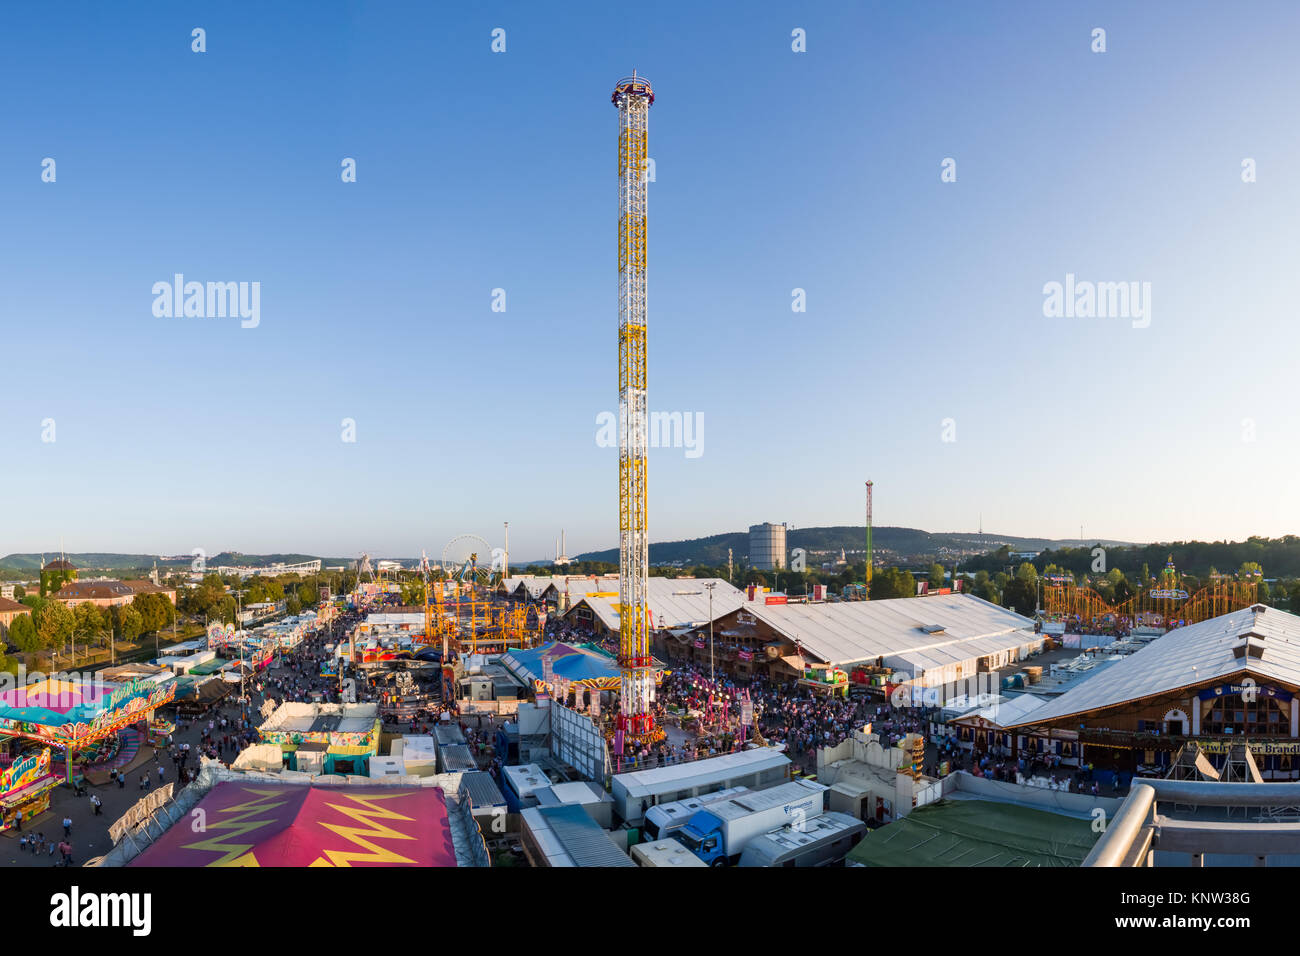 Drop Tower fahren Achterbahn Festival Stuttgart Deutschland Landschaft Sonnenuntergang Stockfoto